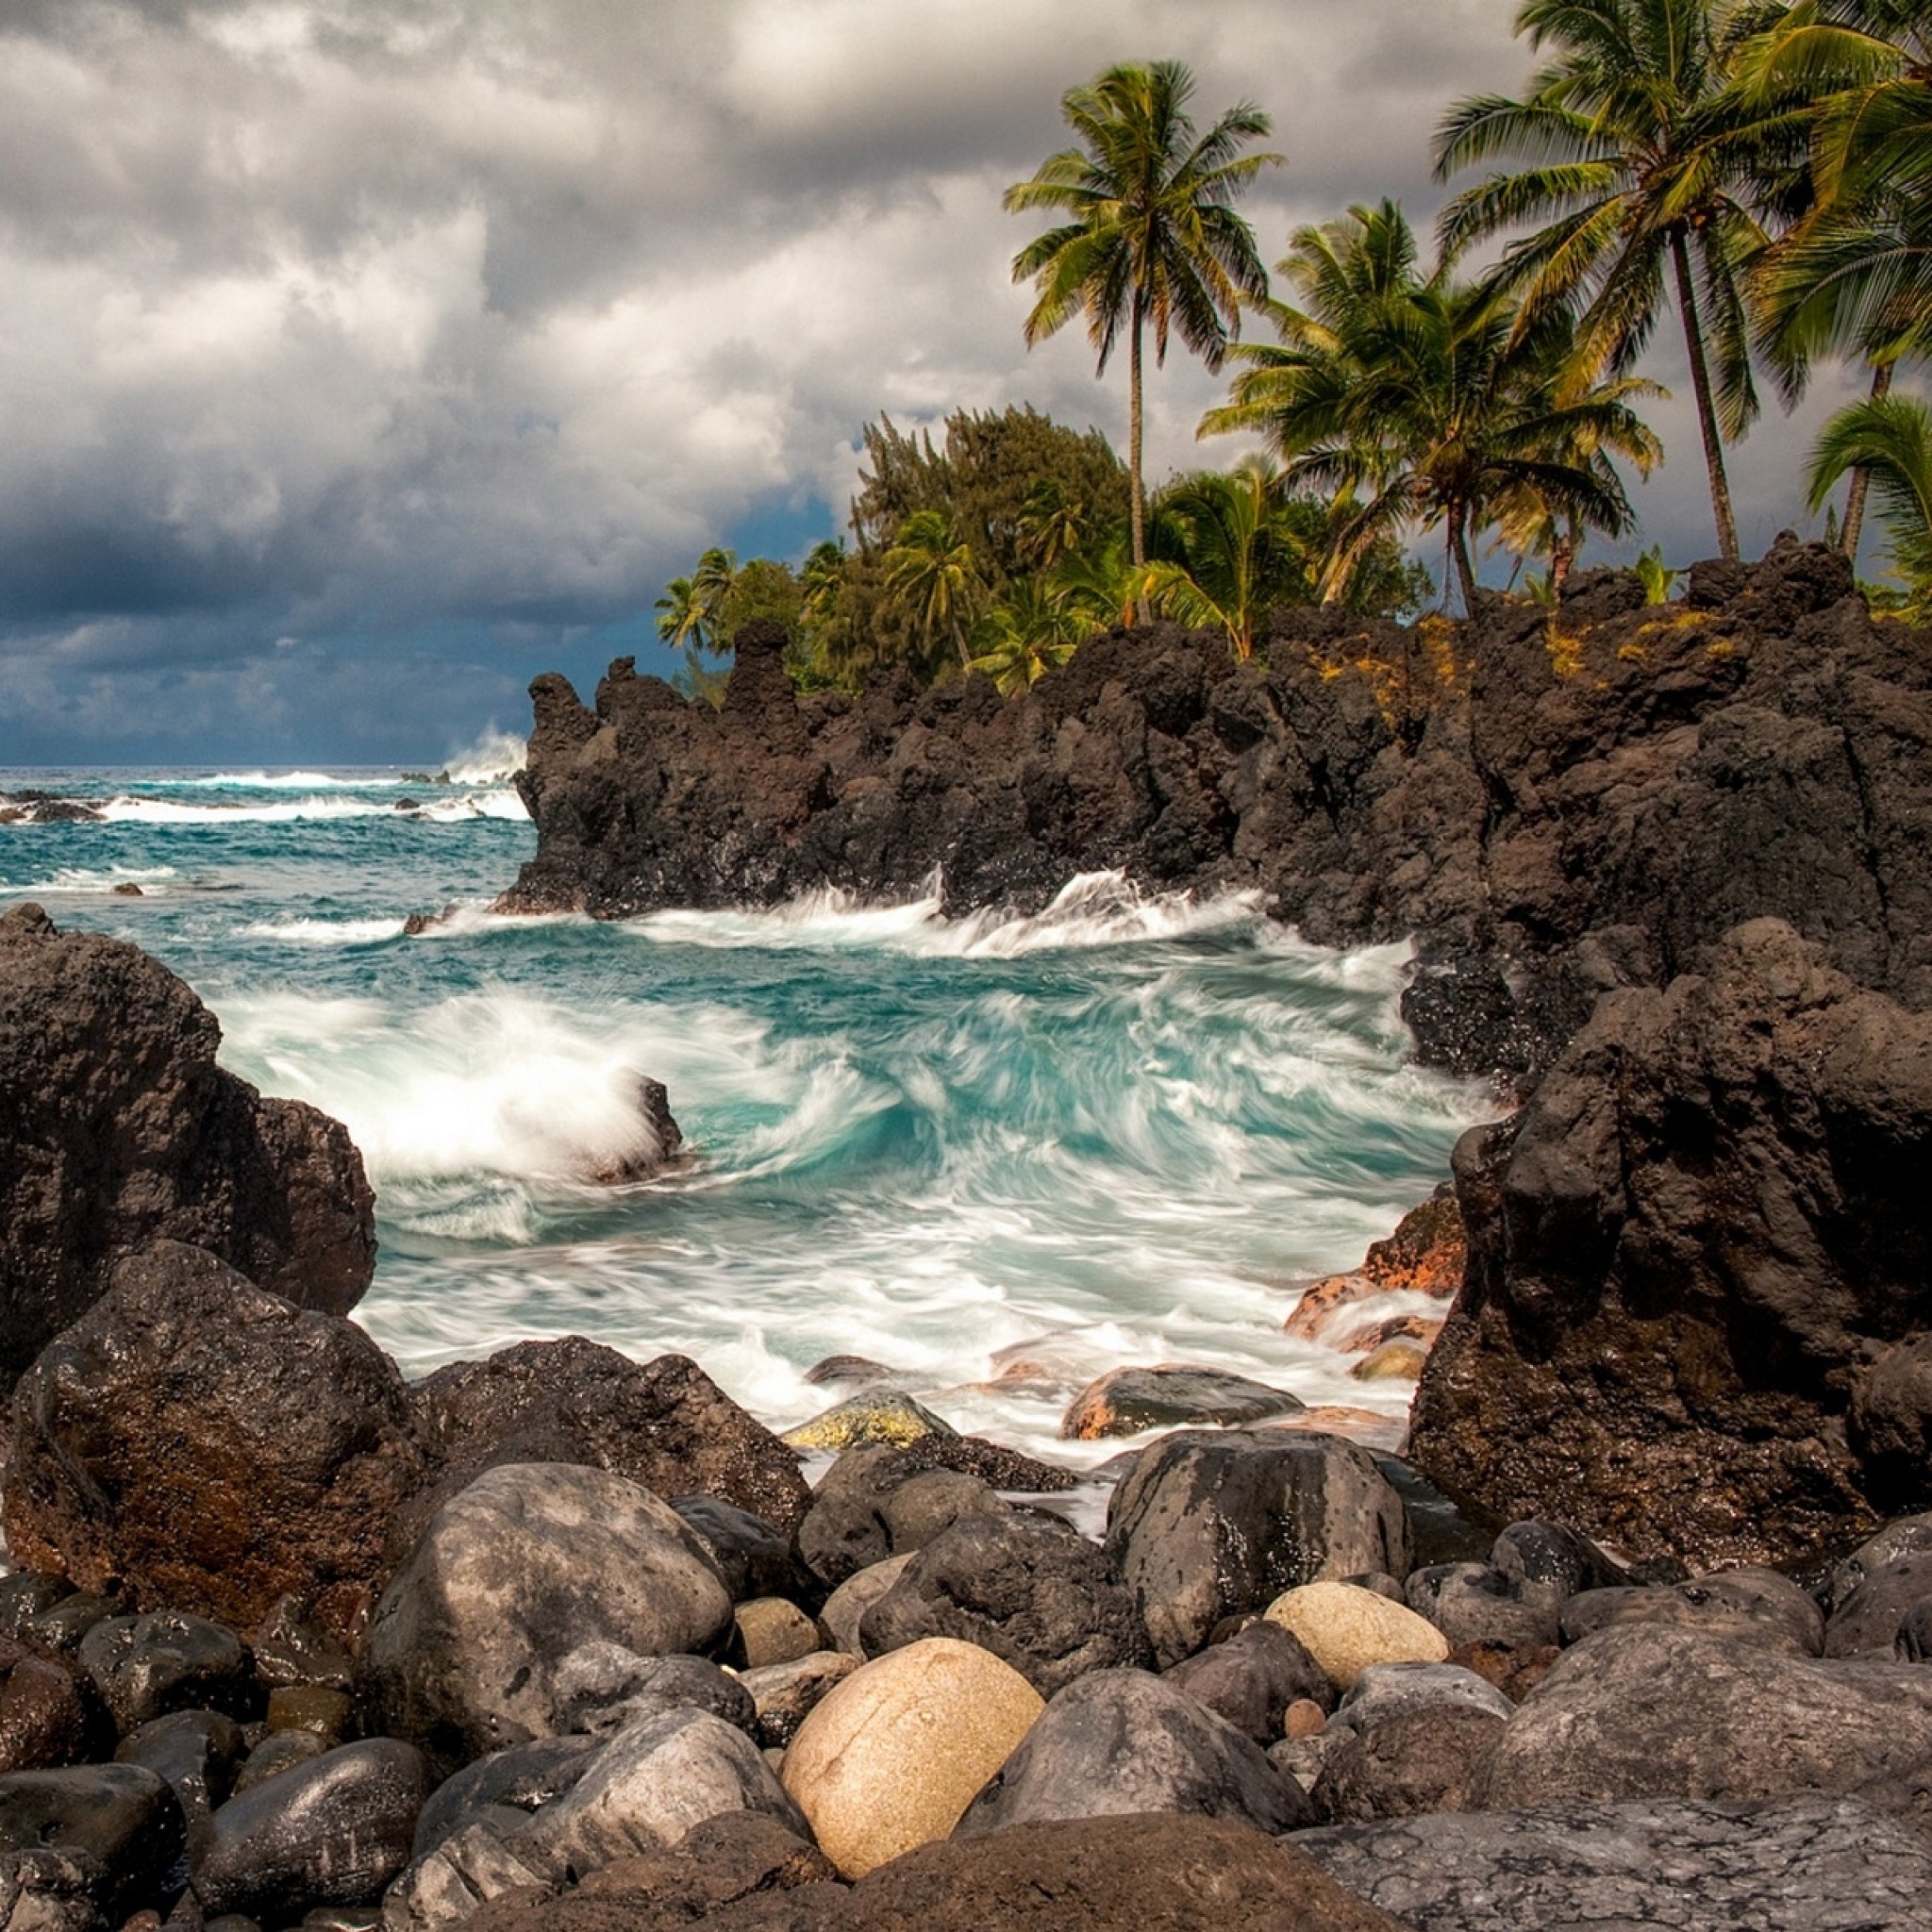 Preview wallpaper maui, hawaii, pacific ocean, cliffs, rocks, surf, palm